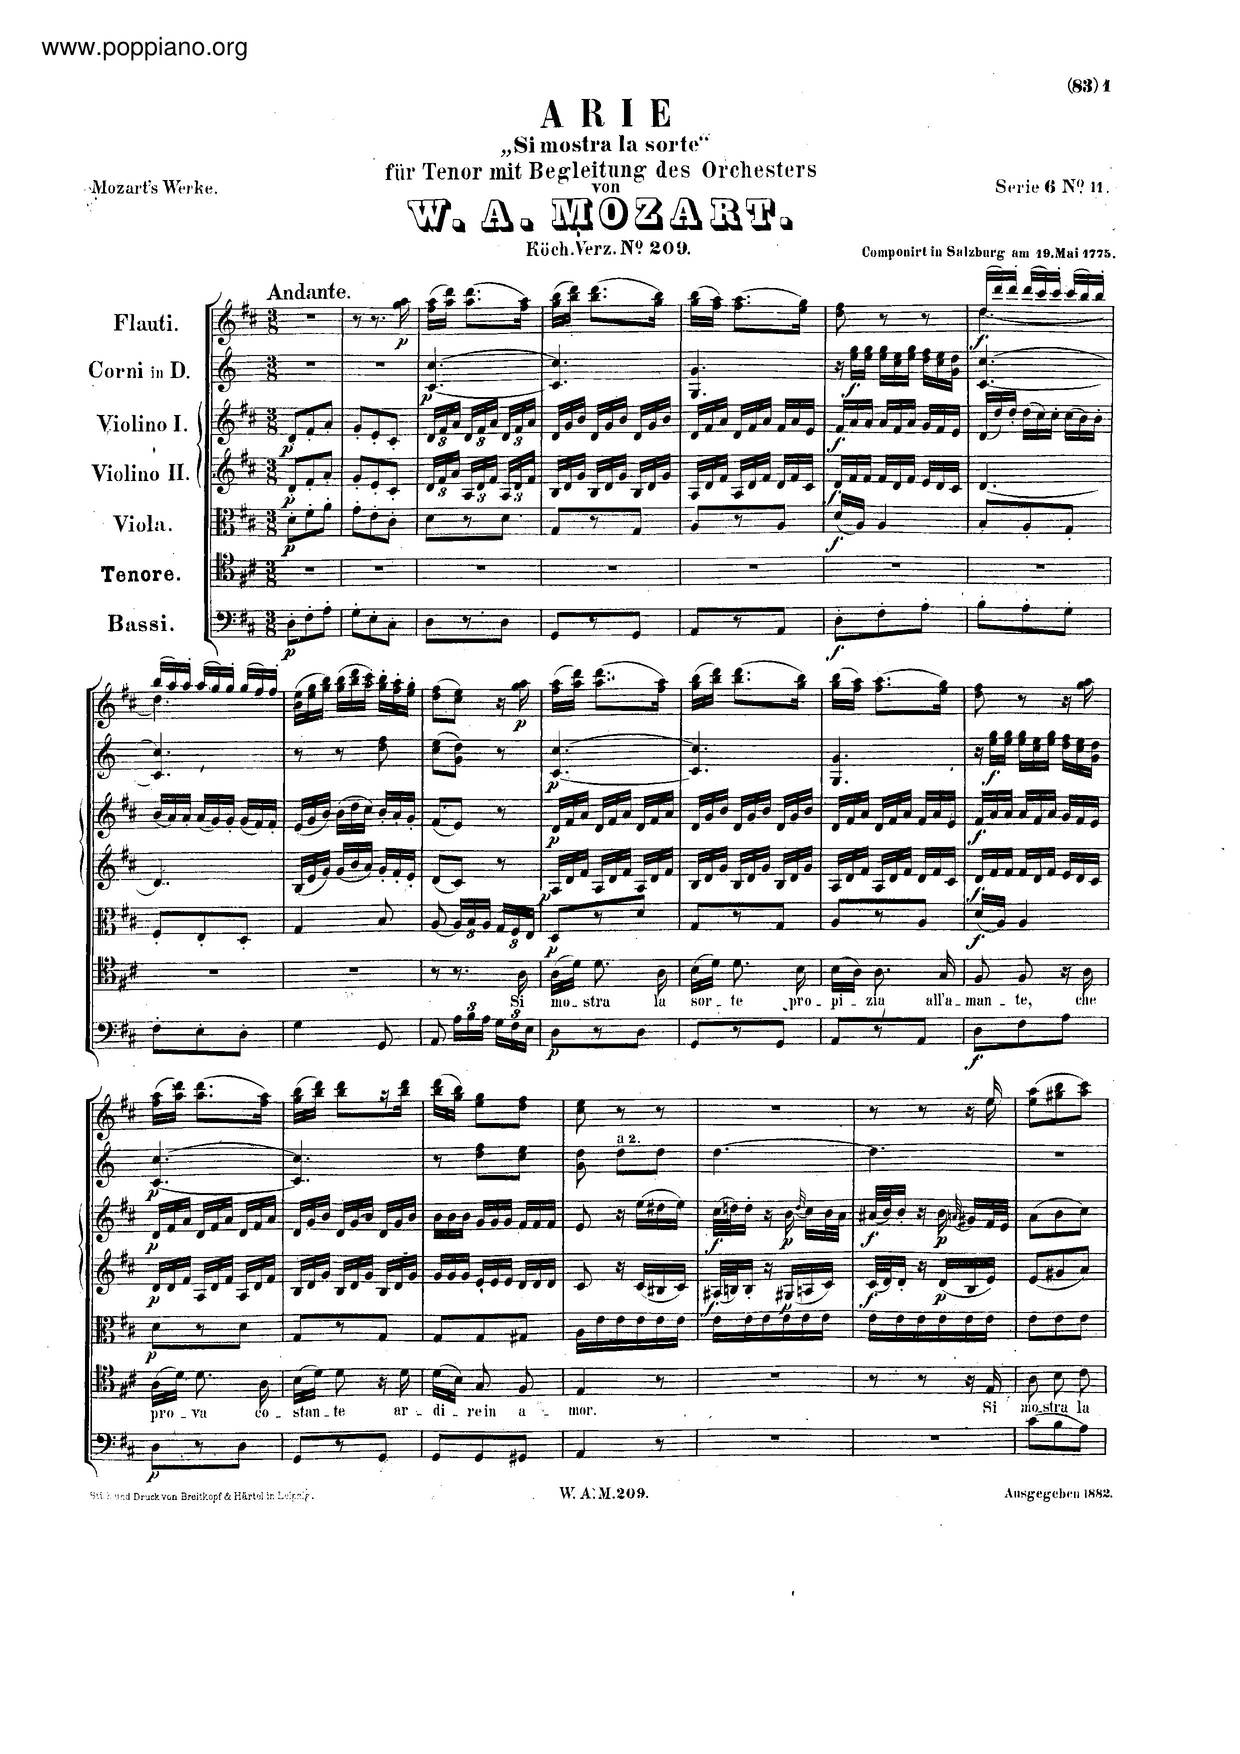 Si Mostra La Sorte, K. 209ピアノ譜